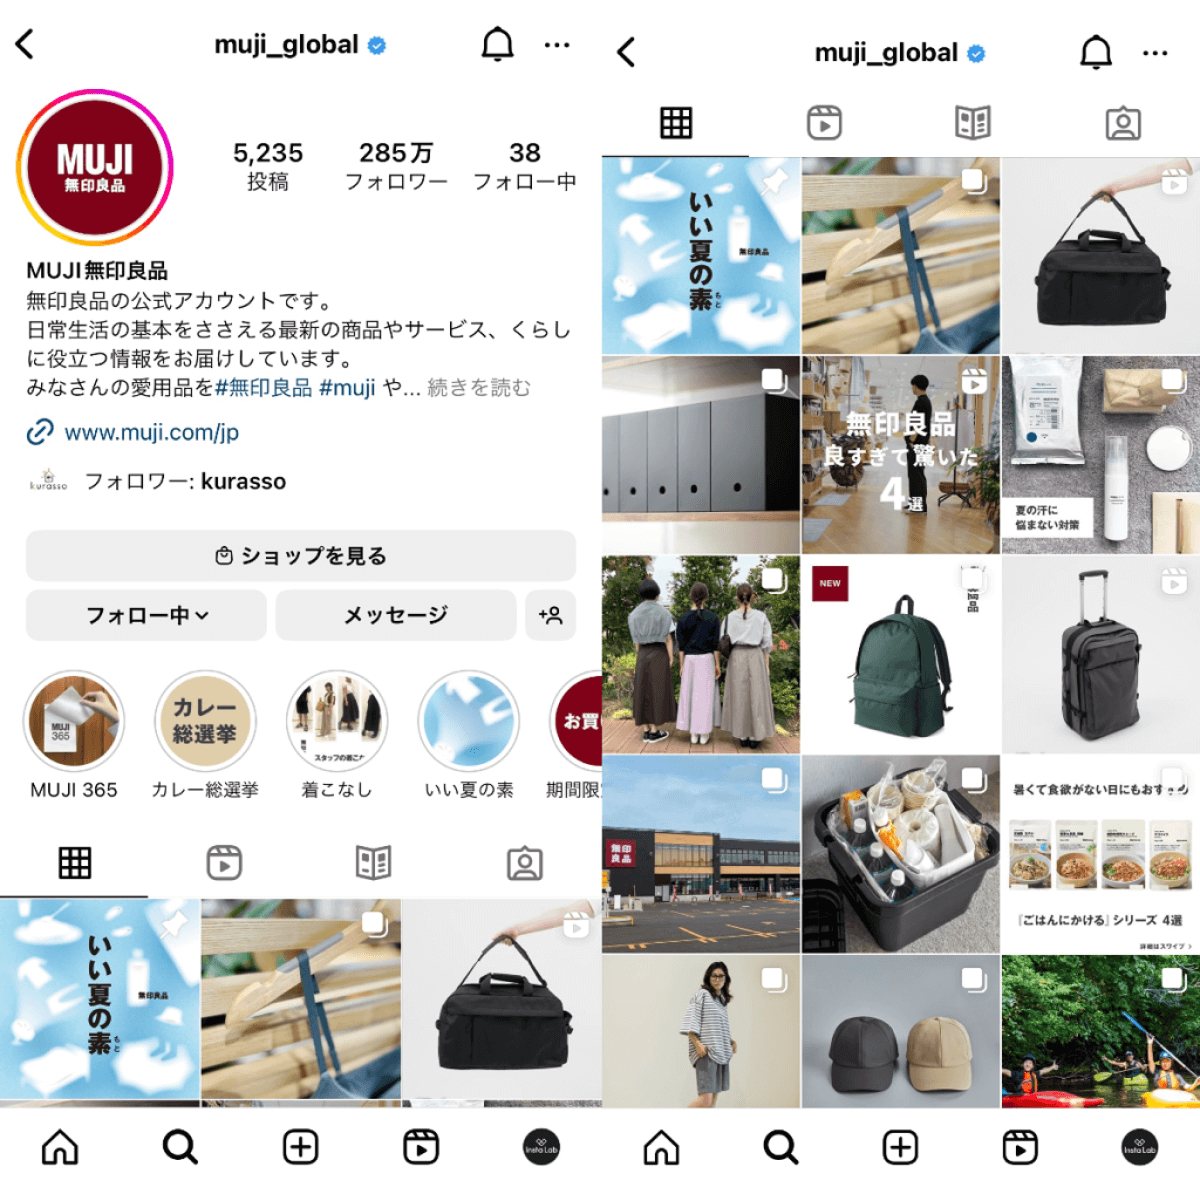 instagram-account-muji-global